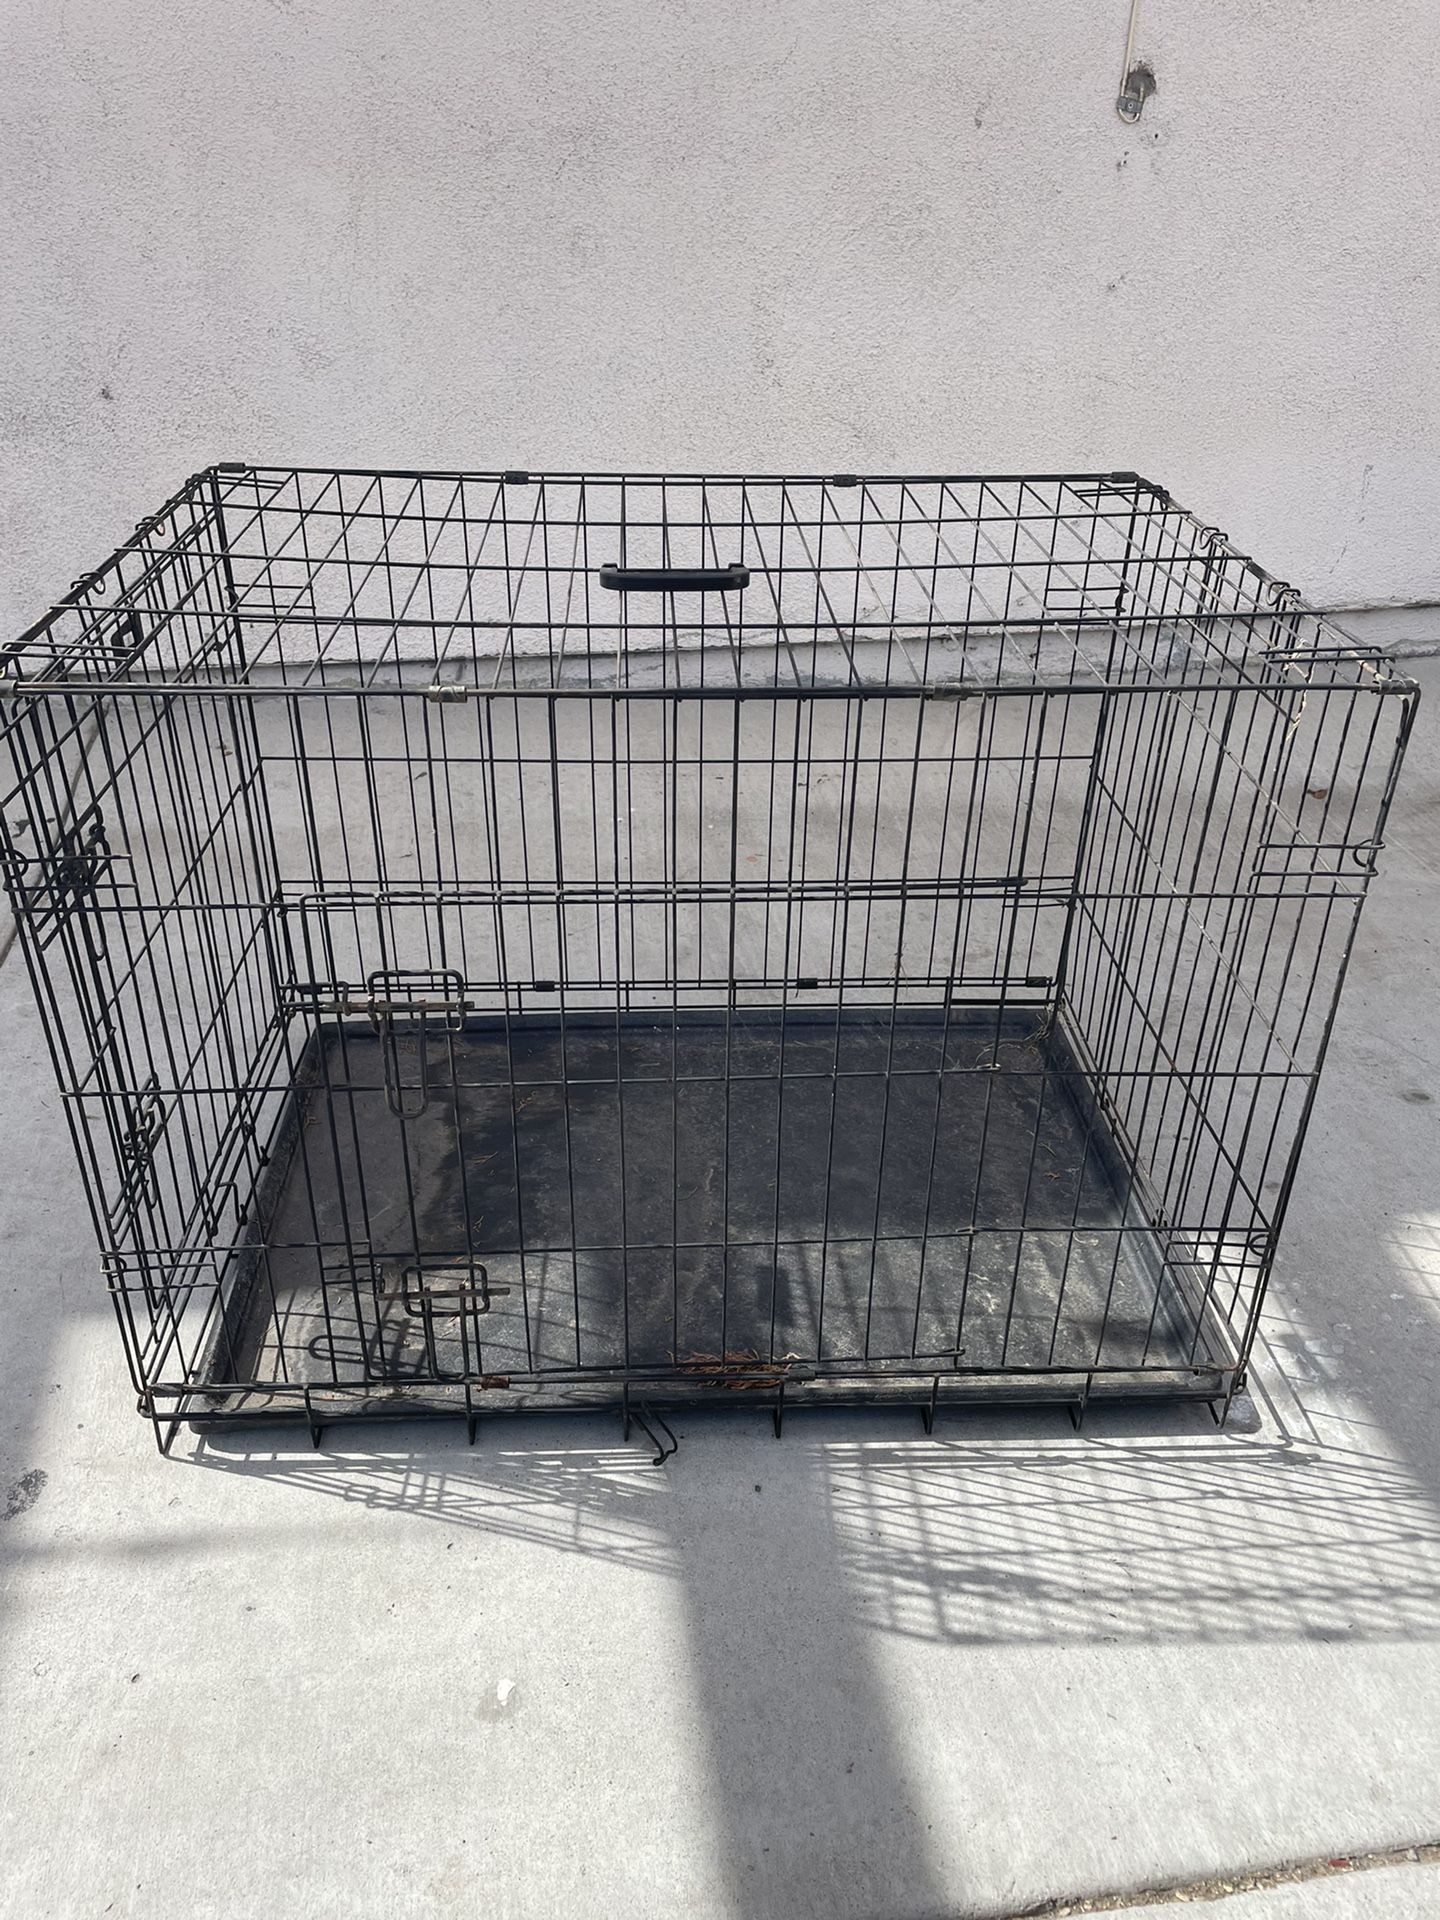 Medium dog cage